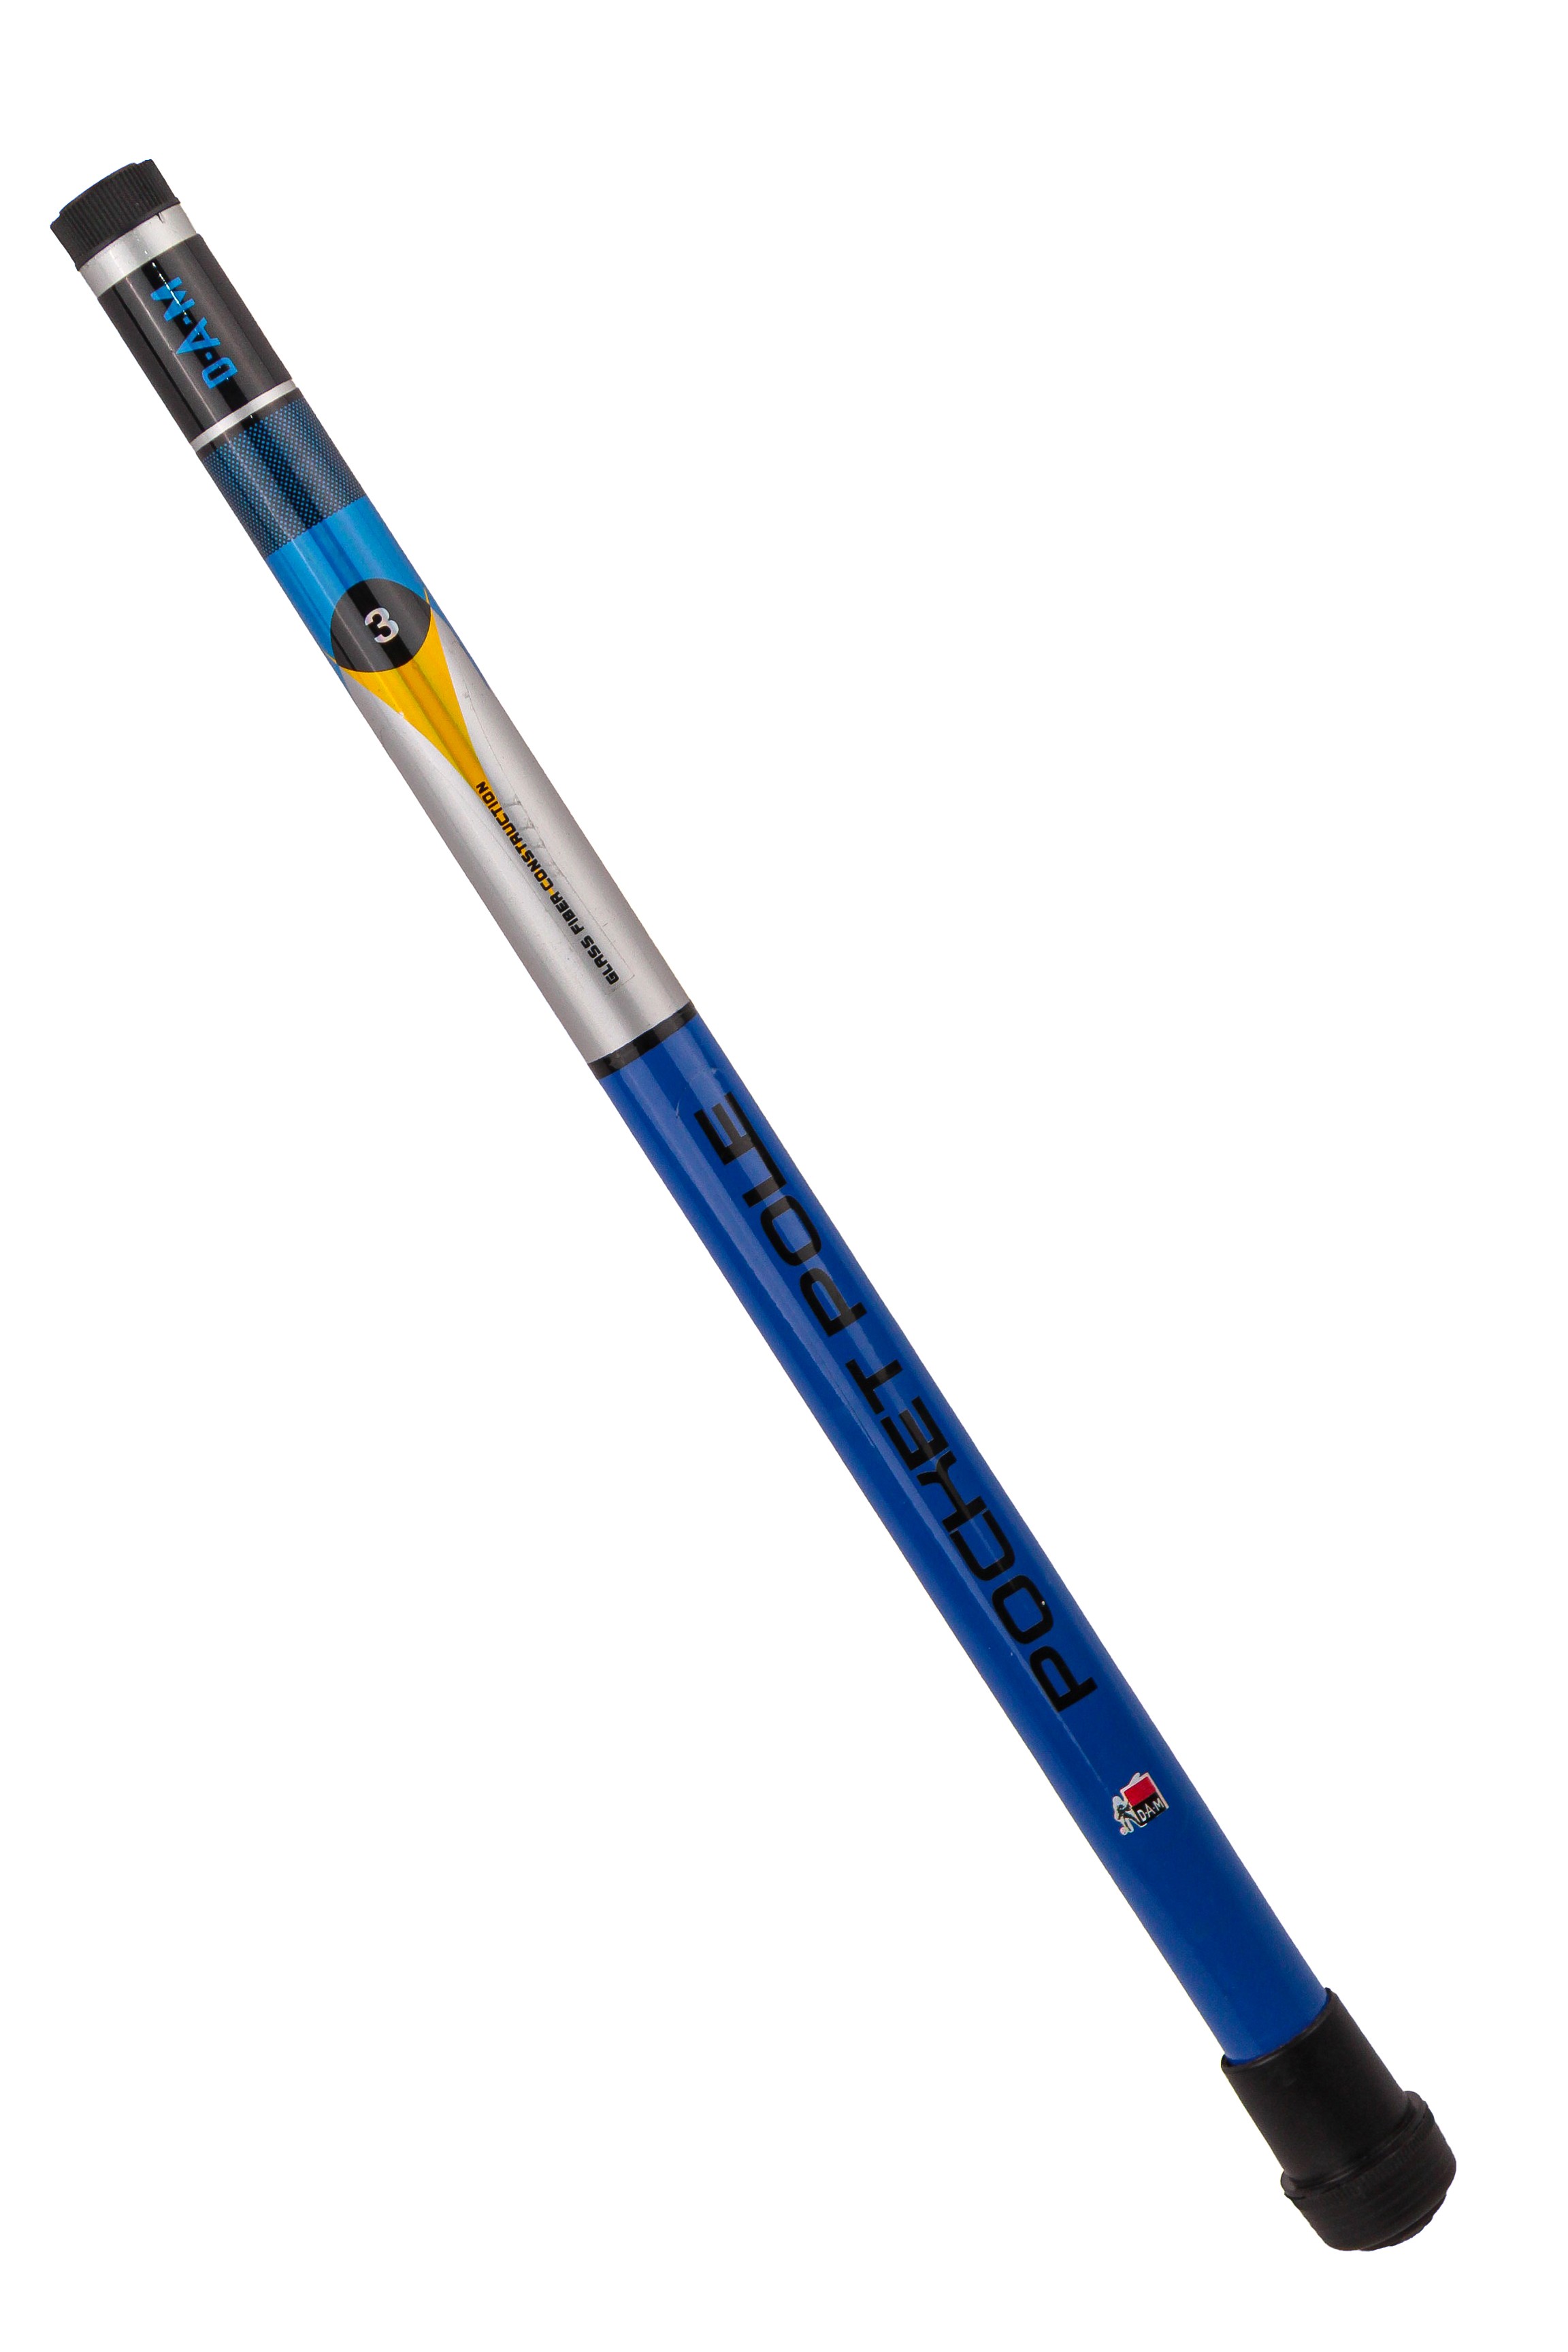 Удилище DAM Tele pocket pole glass fiber 3м - фото 1